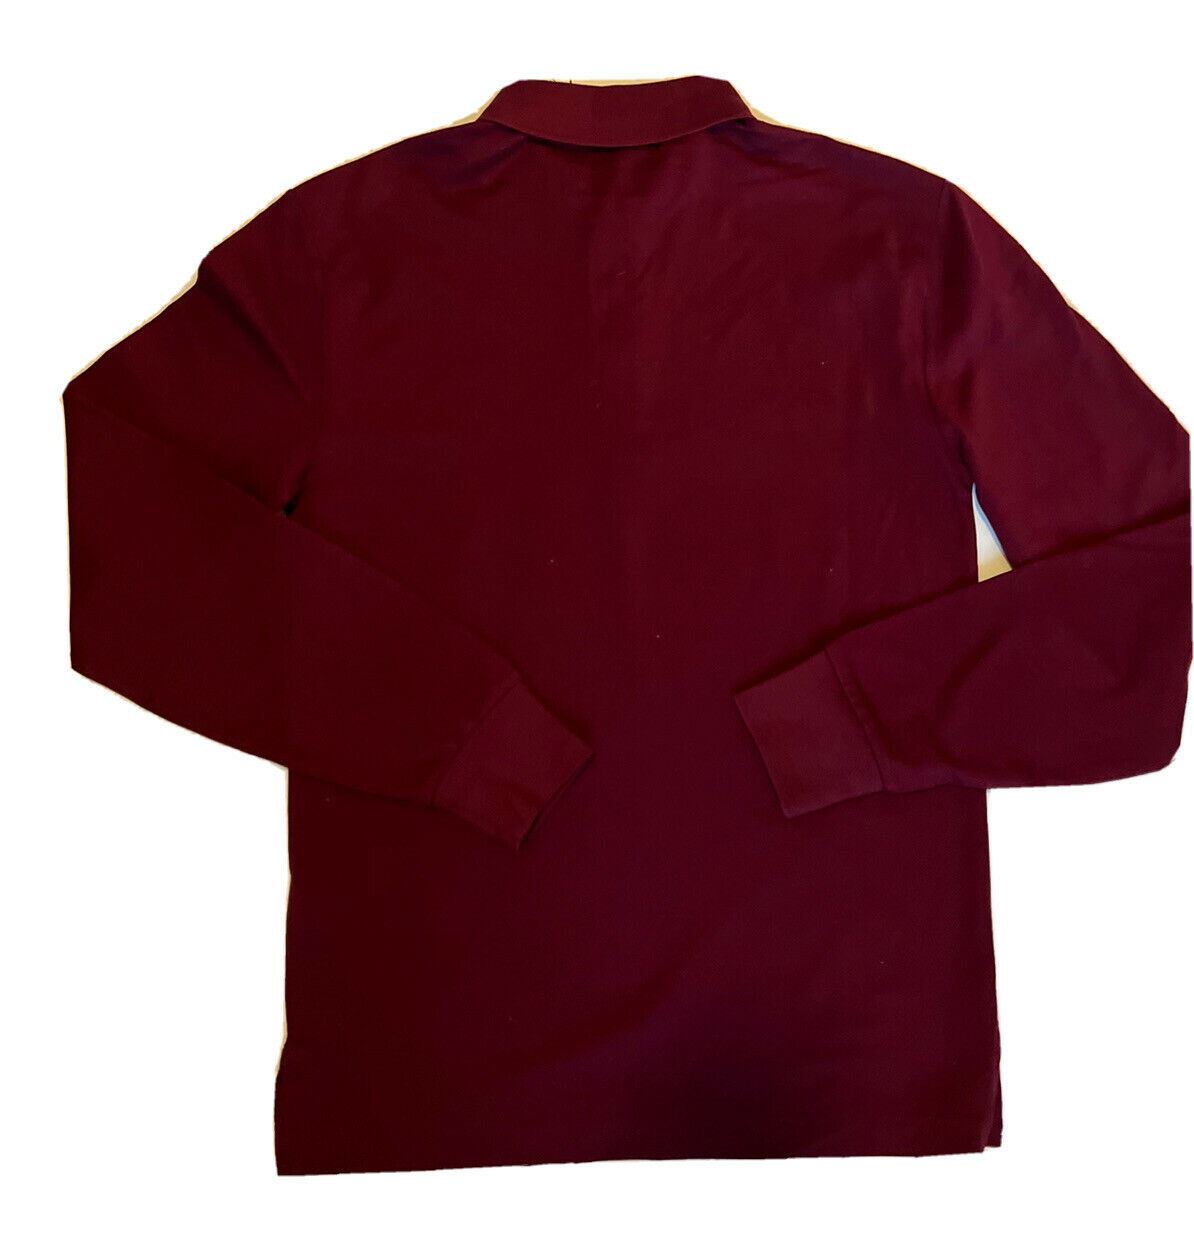 NWT $125 Polo Ralph Lauren Slim Fit Long Sleeve Polo Shirt Burgundy Small